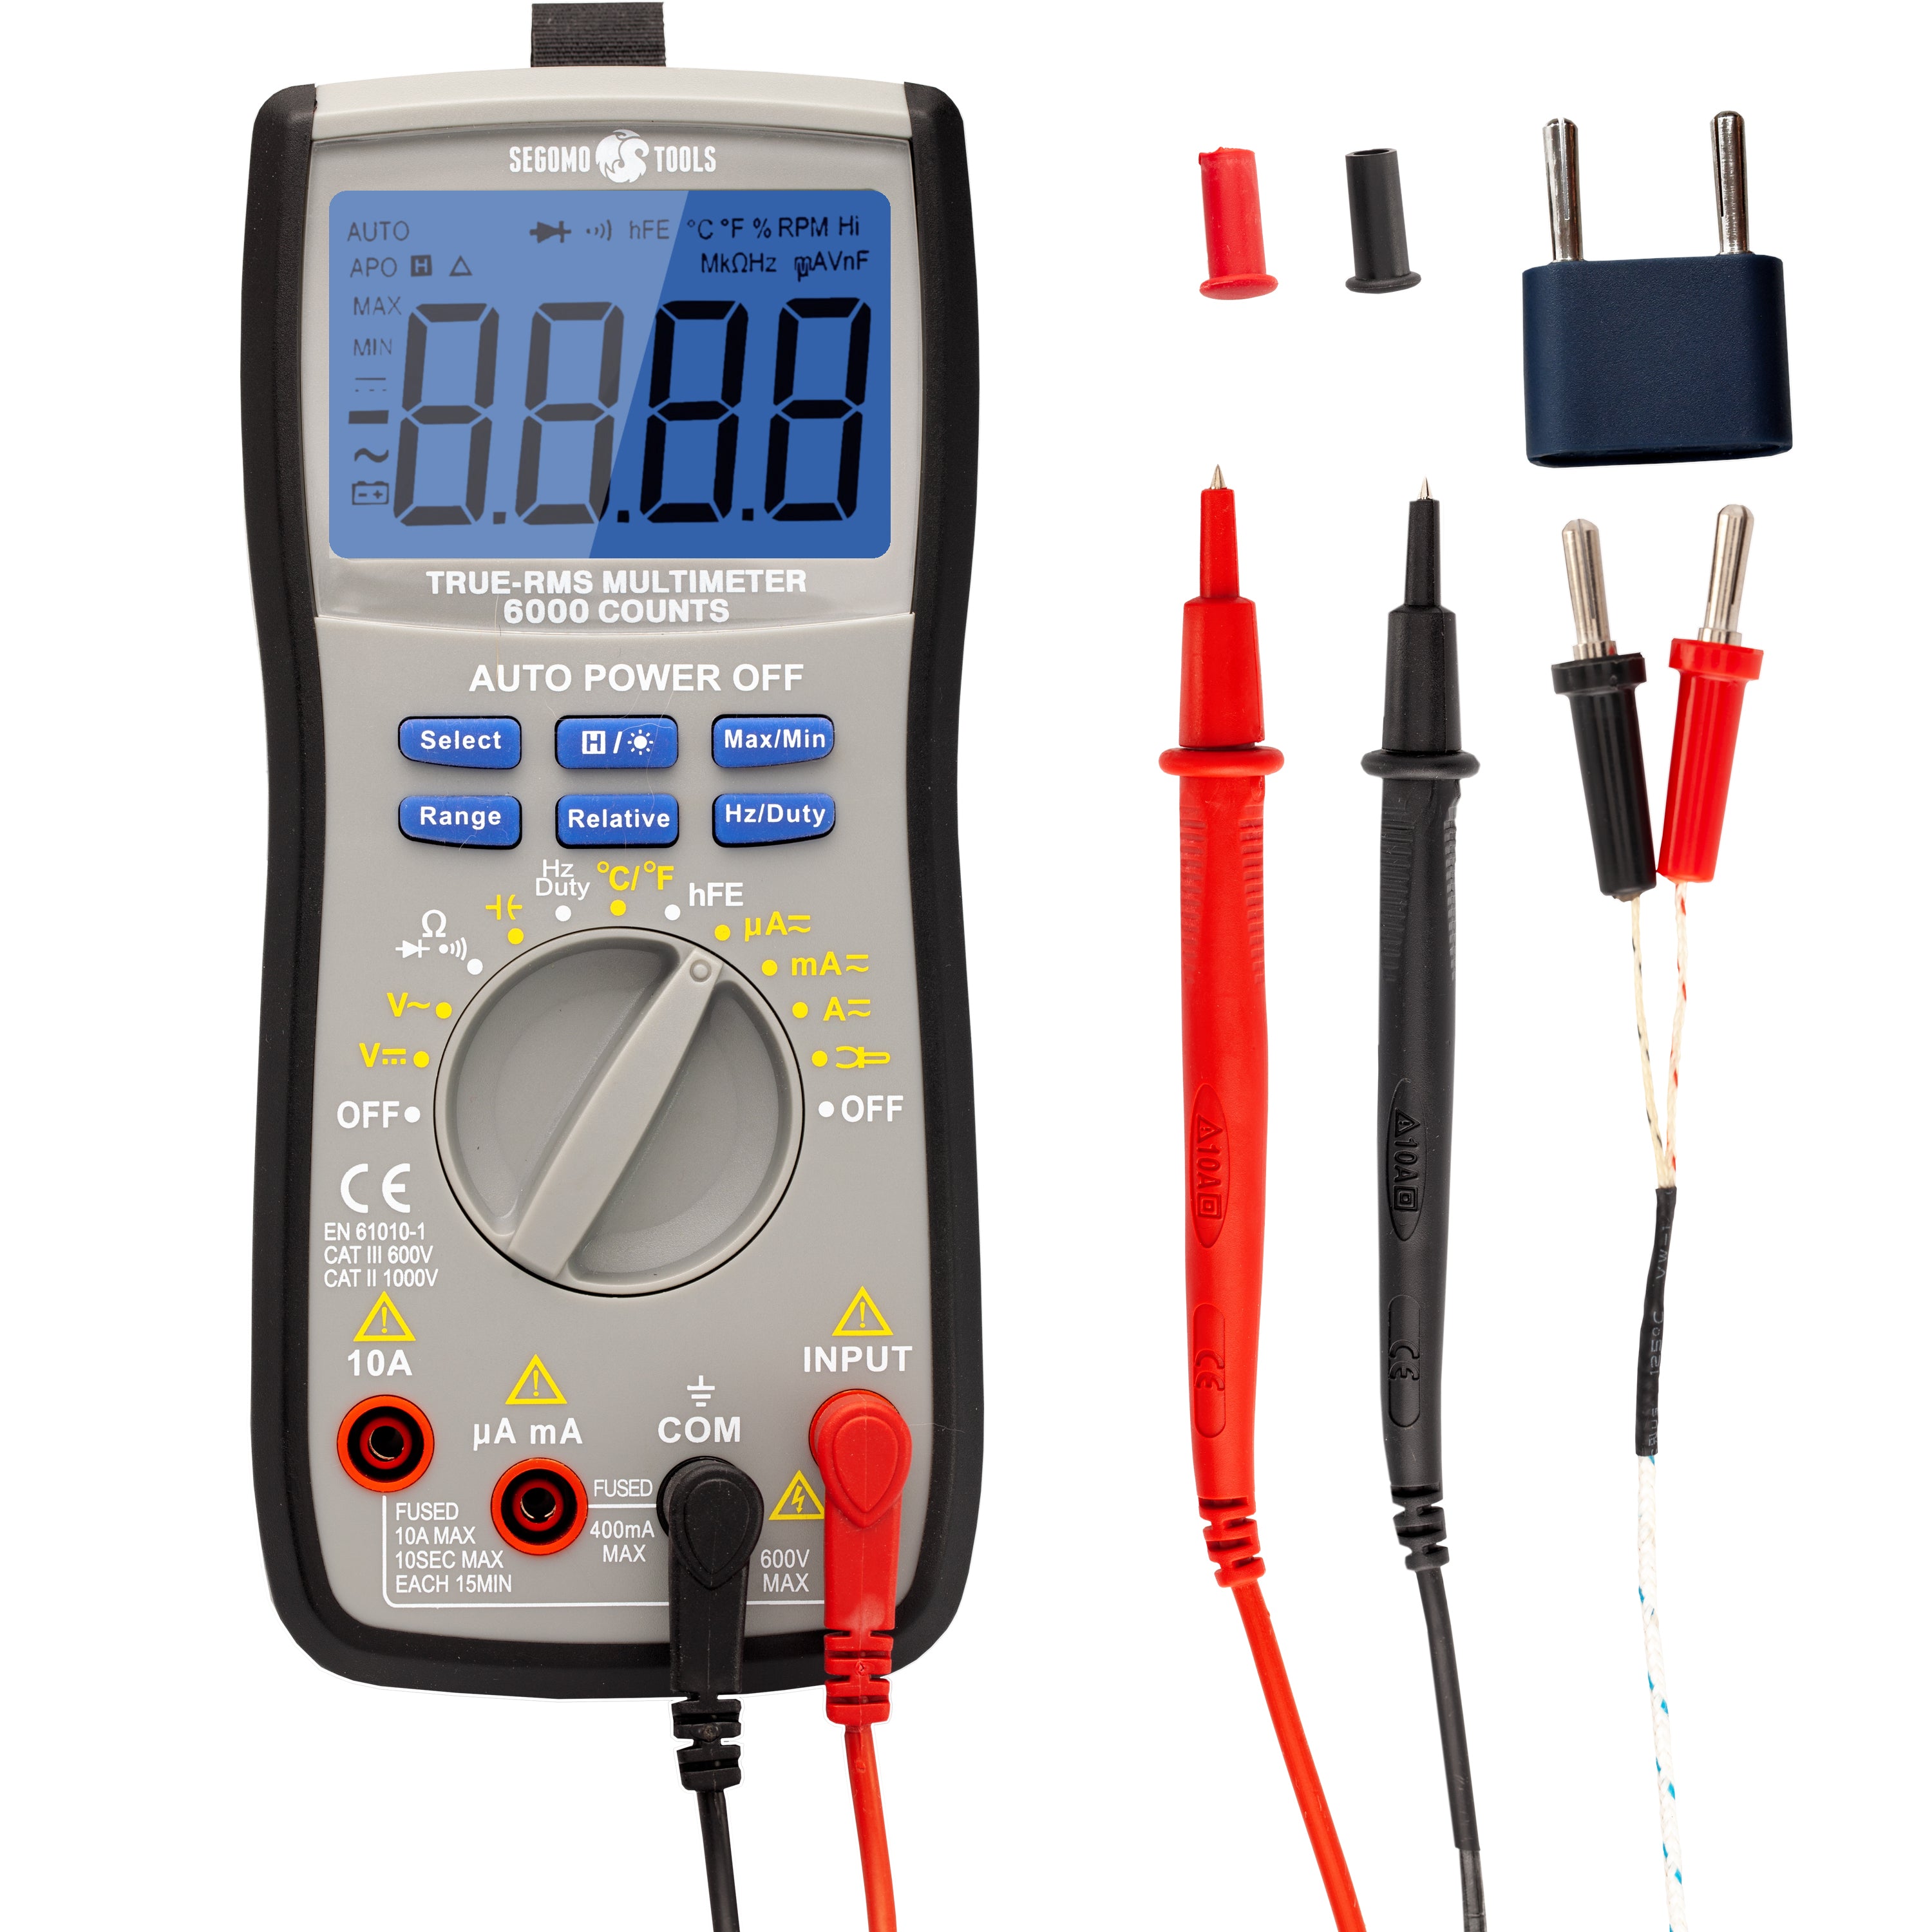 Digital Multimeter: Continuity, Voltage, and Resistance Tester